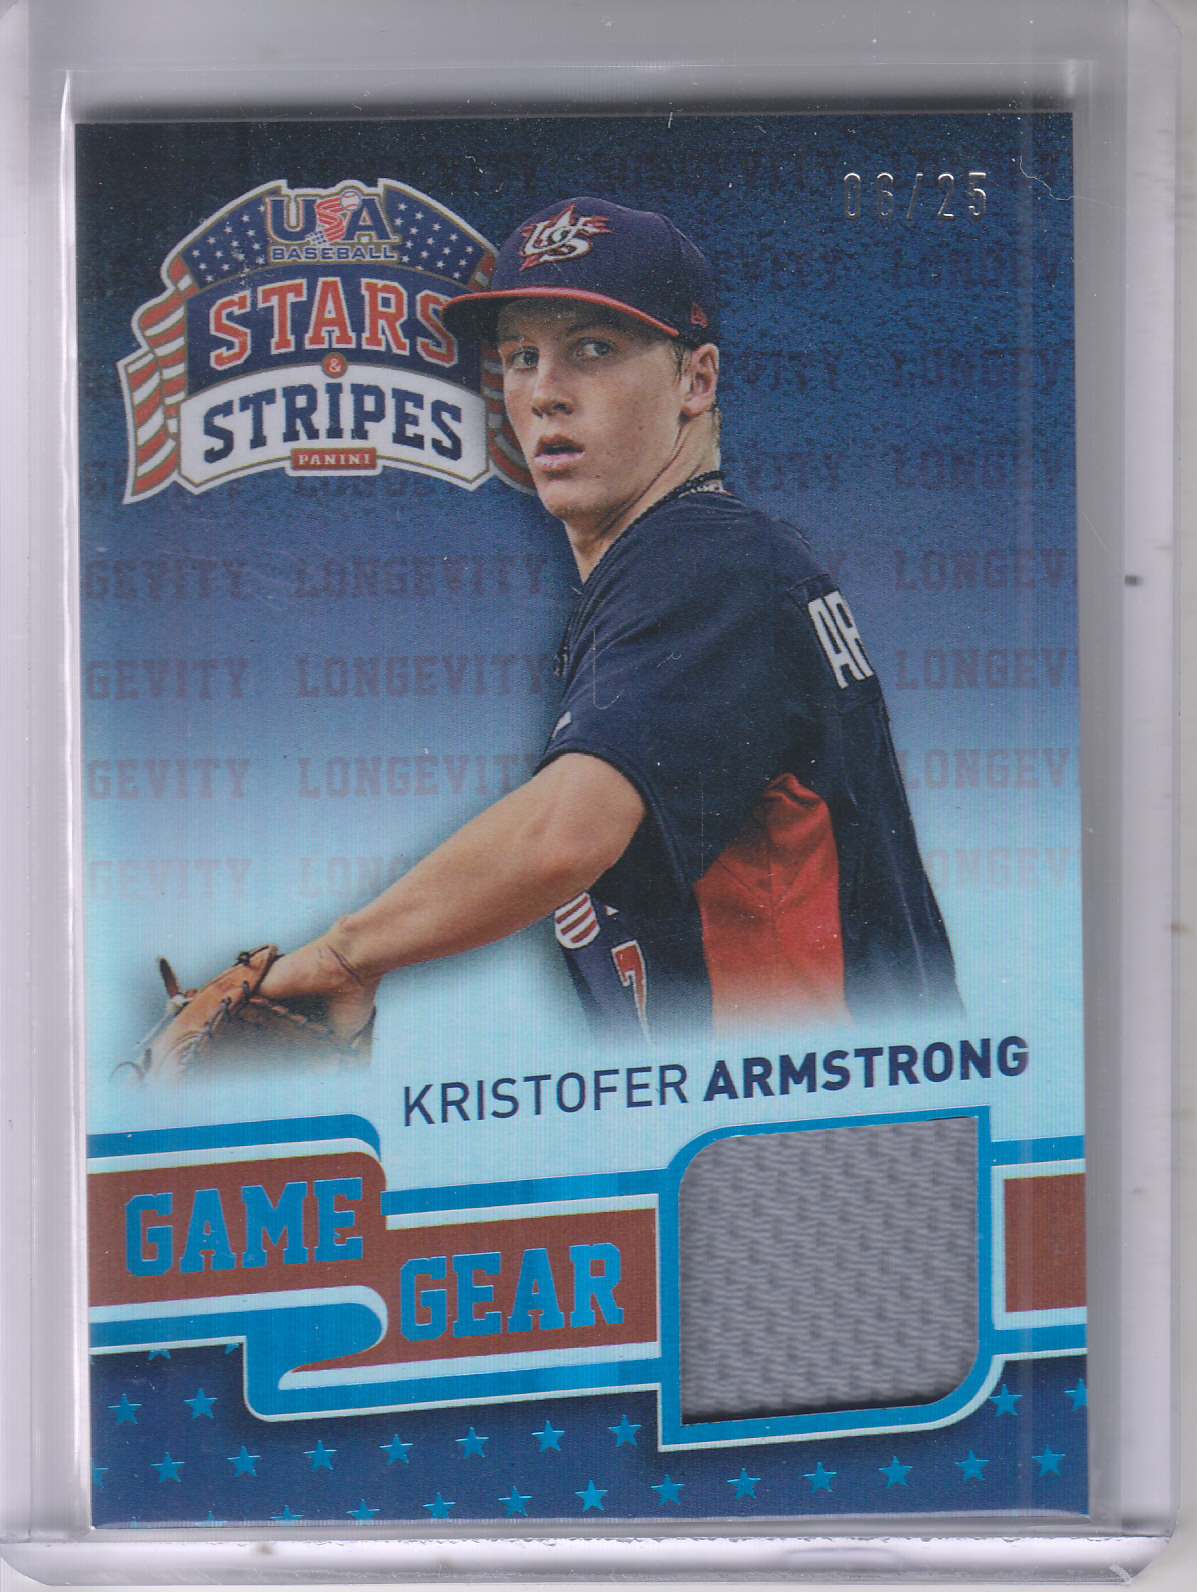 2015 USA Baseball Stars and Stripes Game Gear Materials Longevity Holofoil #57 Kristofer Armstrong/25